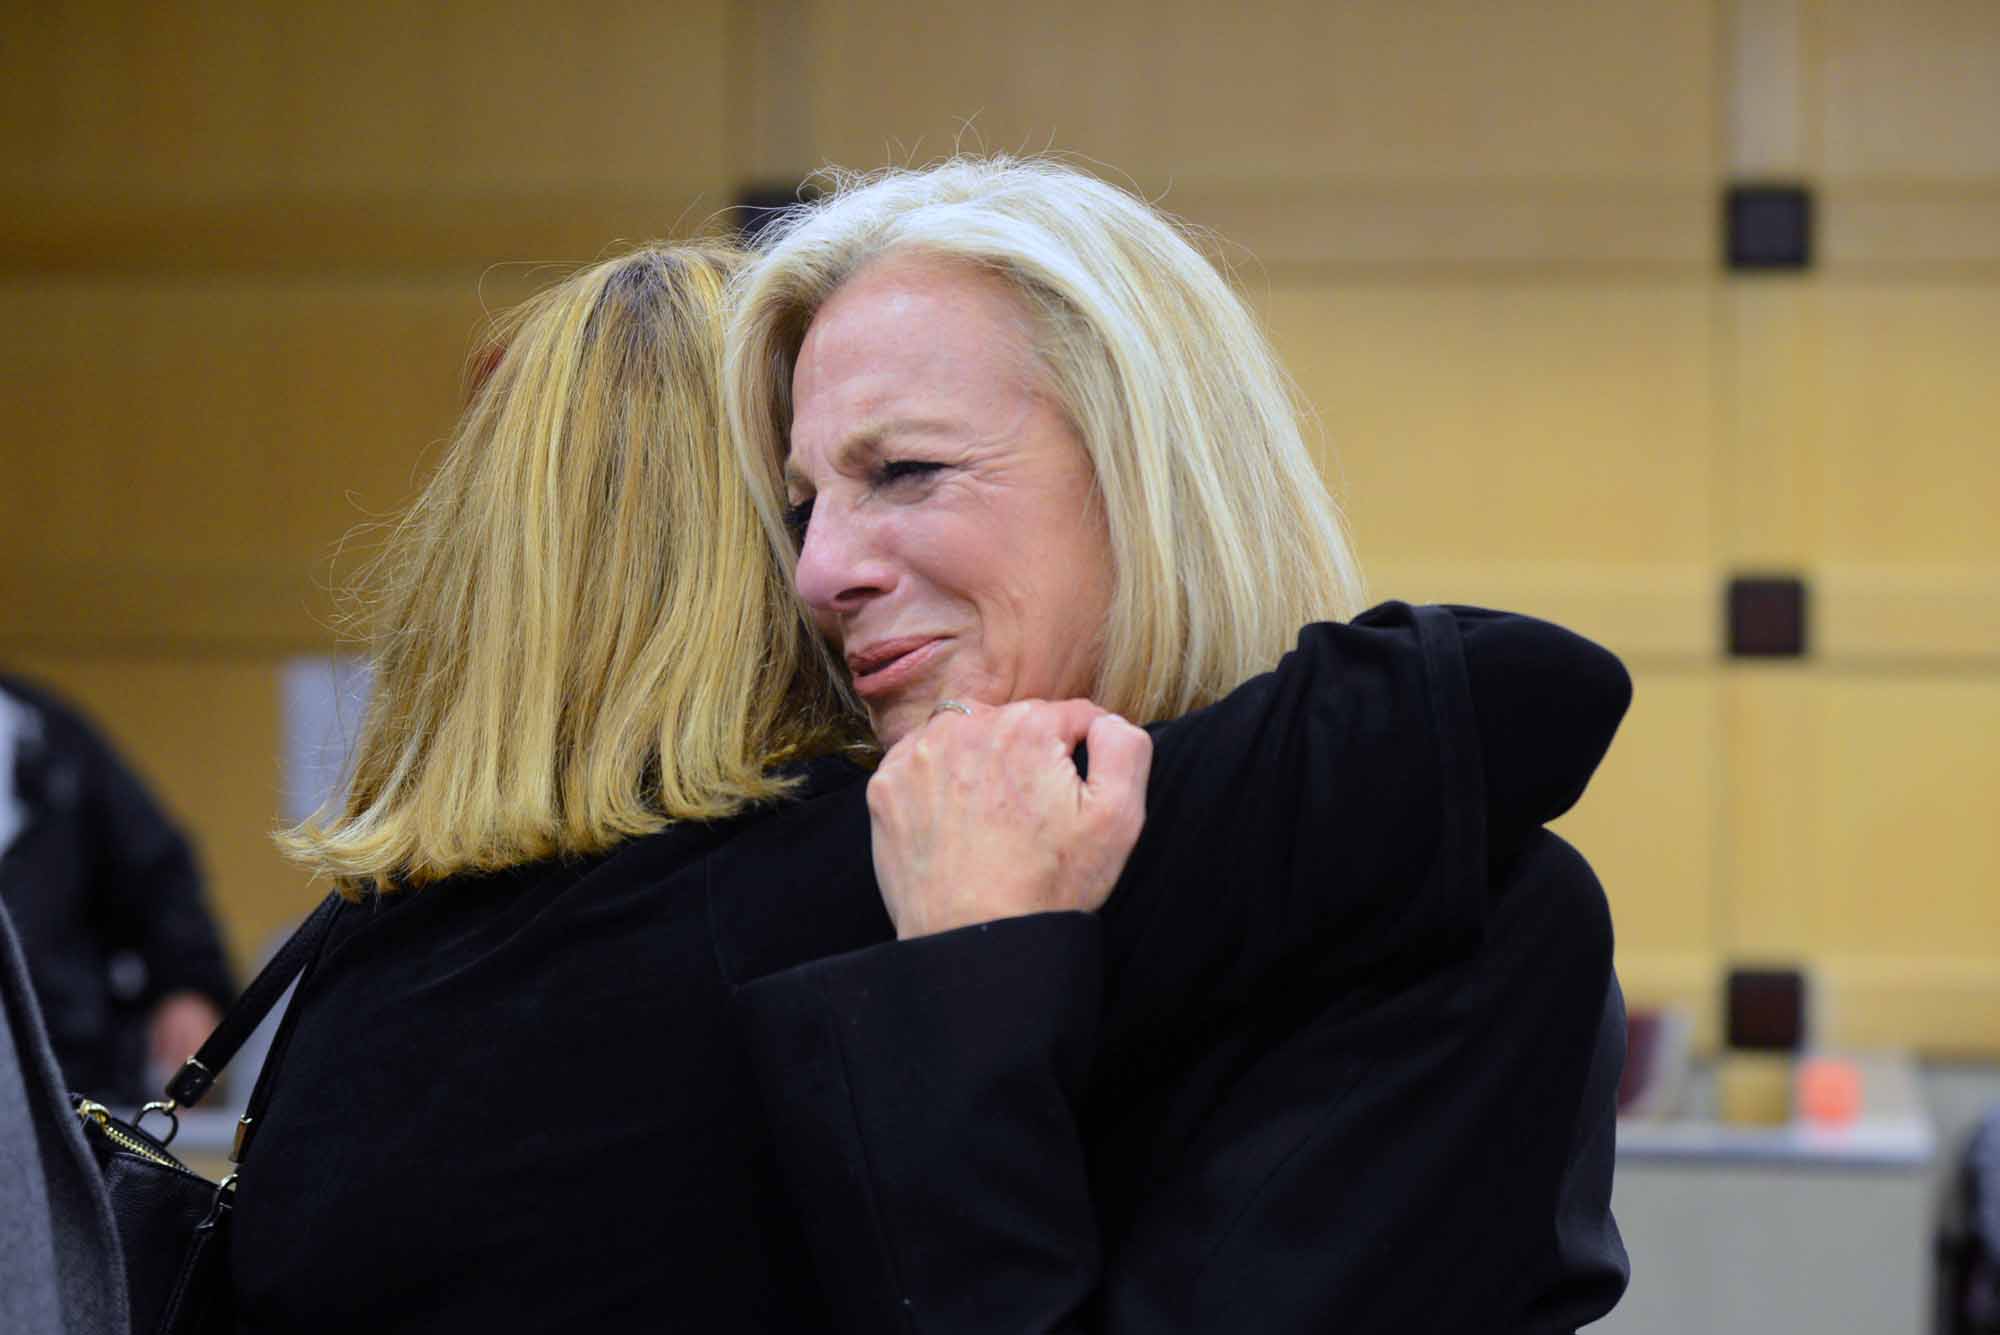 Friend Michele Mellgren hugs Beth Talabisco after the trial.